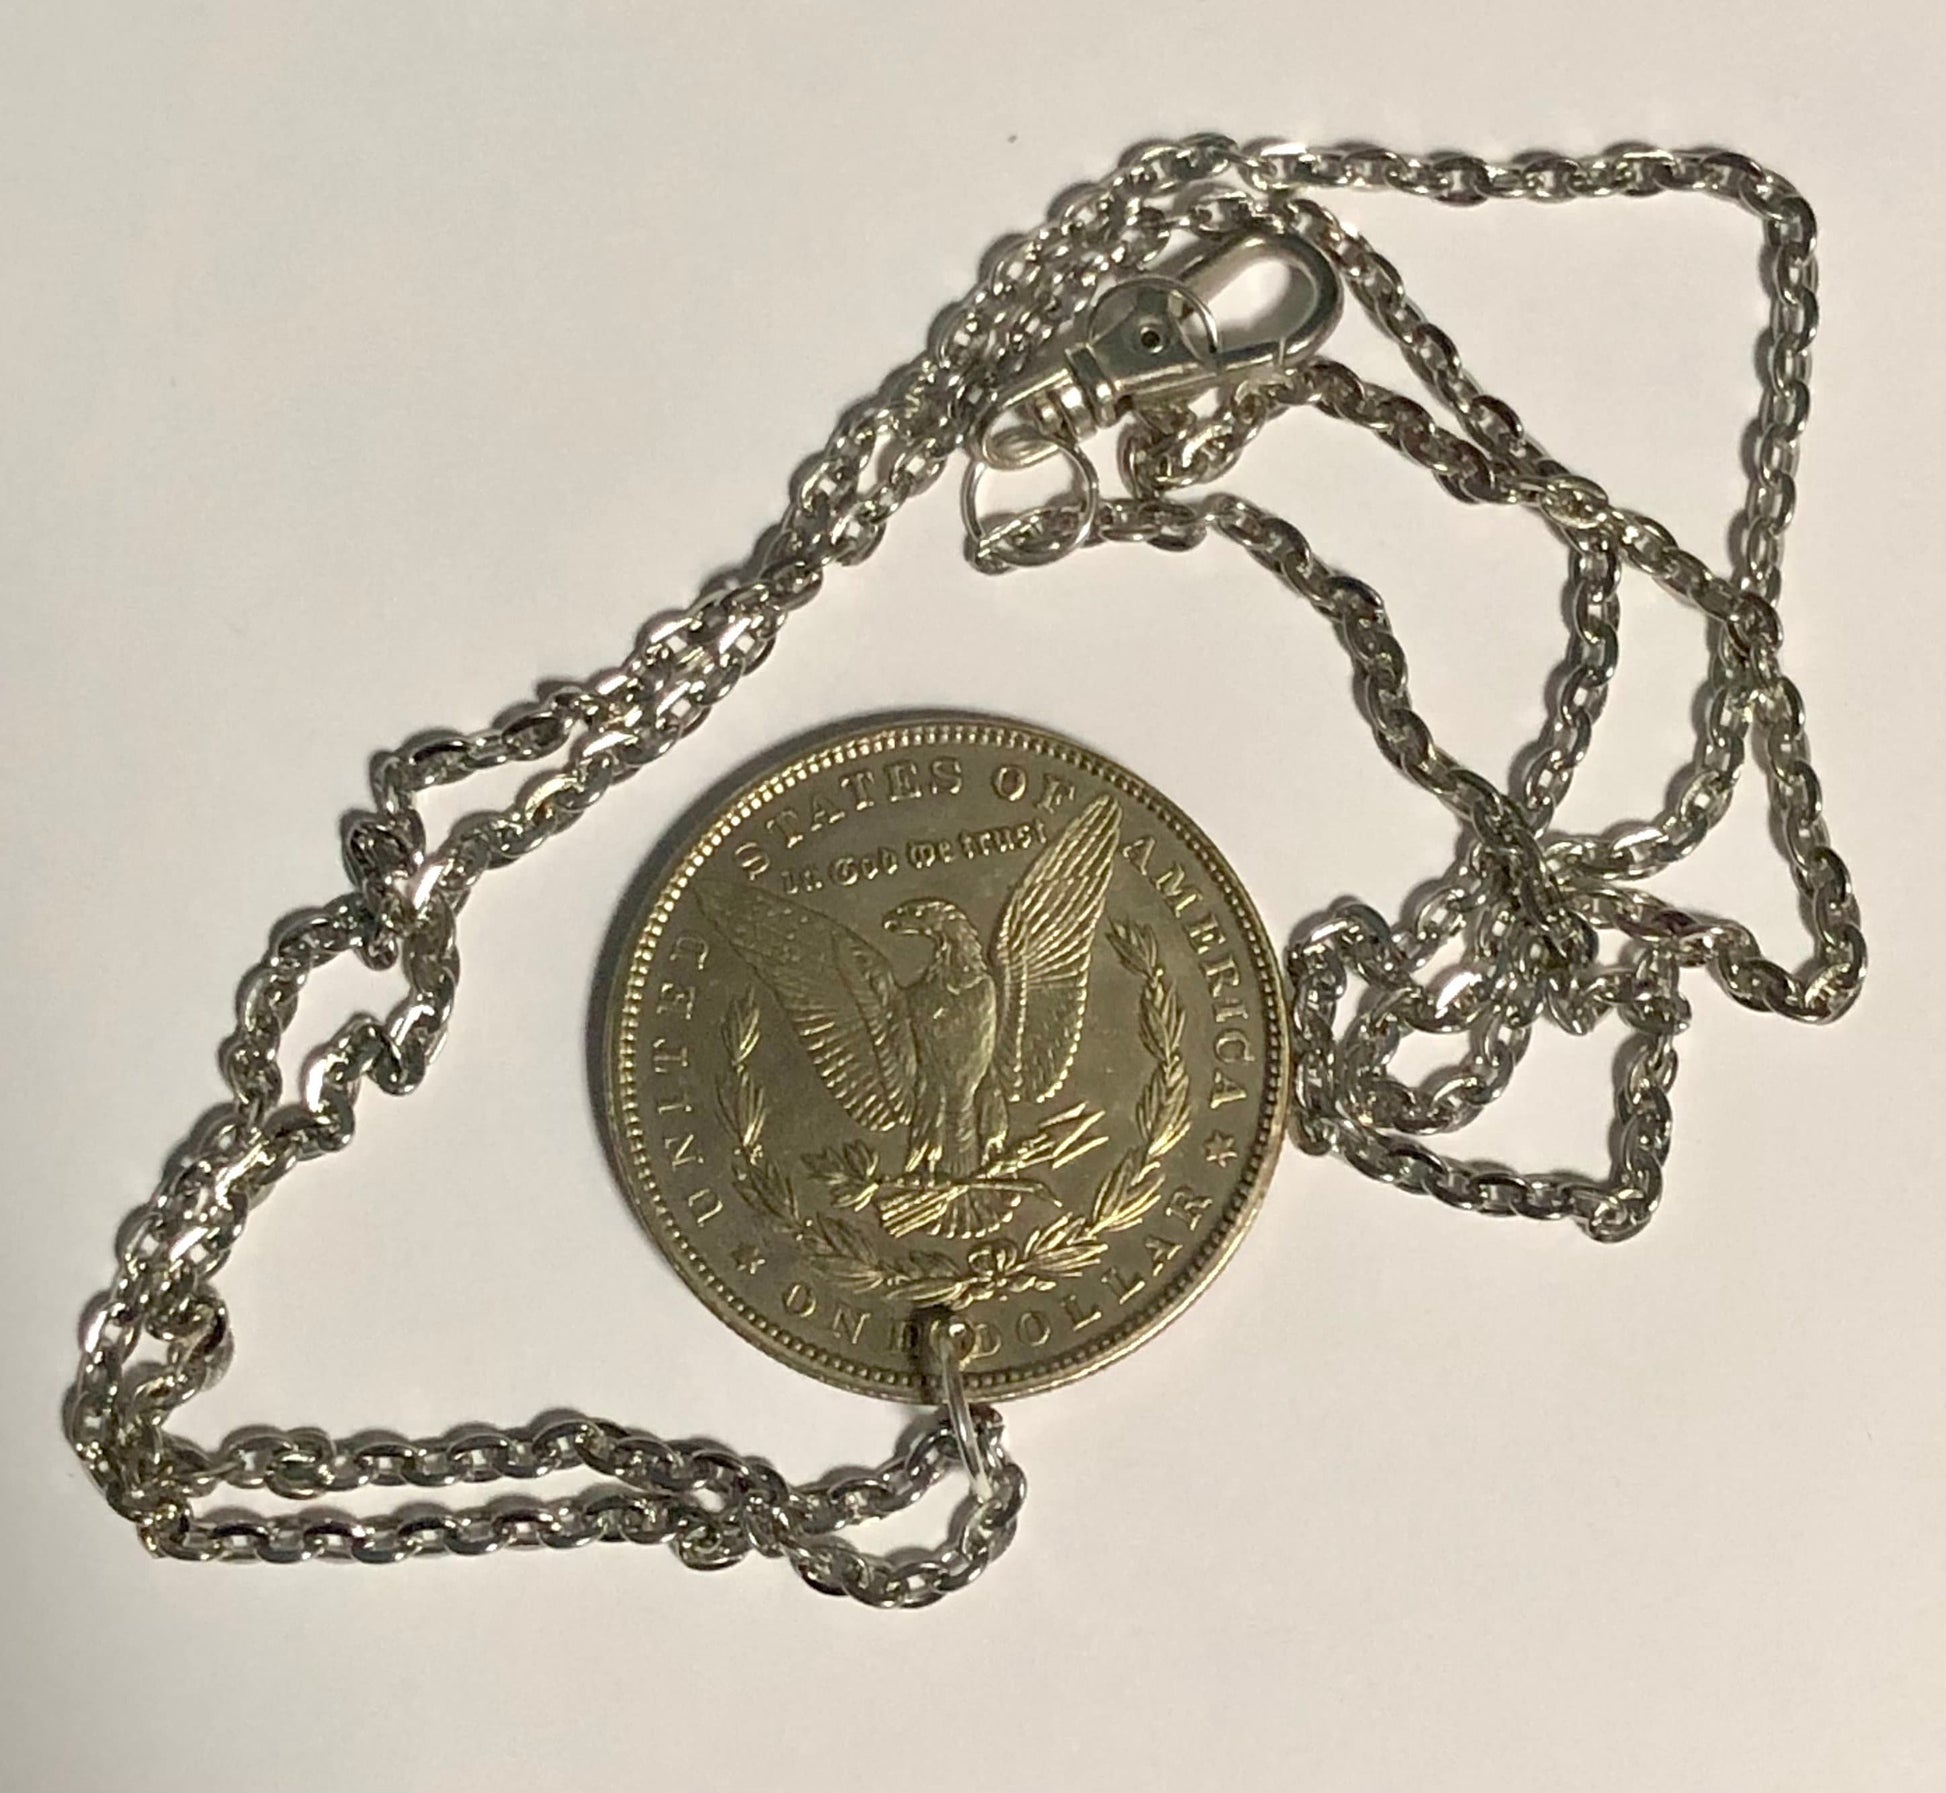 Anime Girl at the Beach Medallion Coin Pendant Necklace Custom Made Vintage Novelty Coins USA Morgan Dollar Eagle - Coin Enthusiast